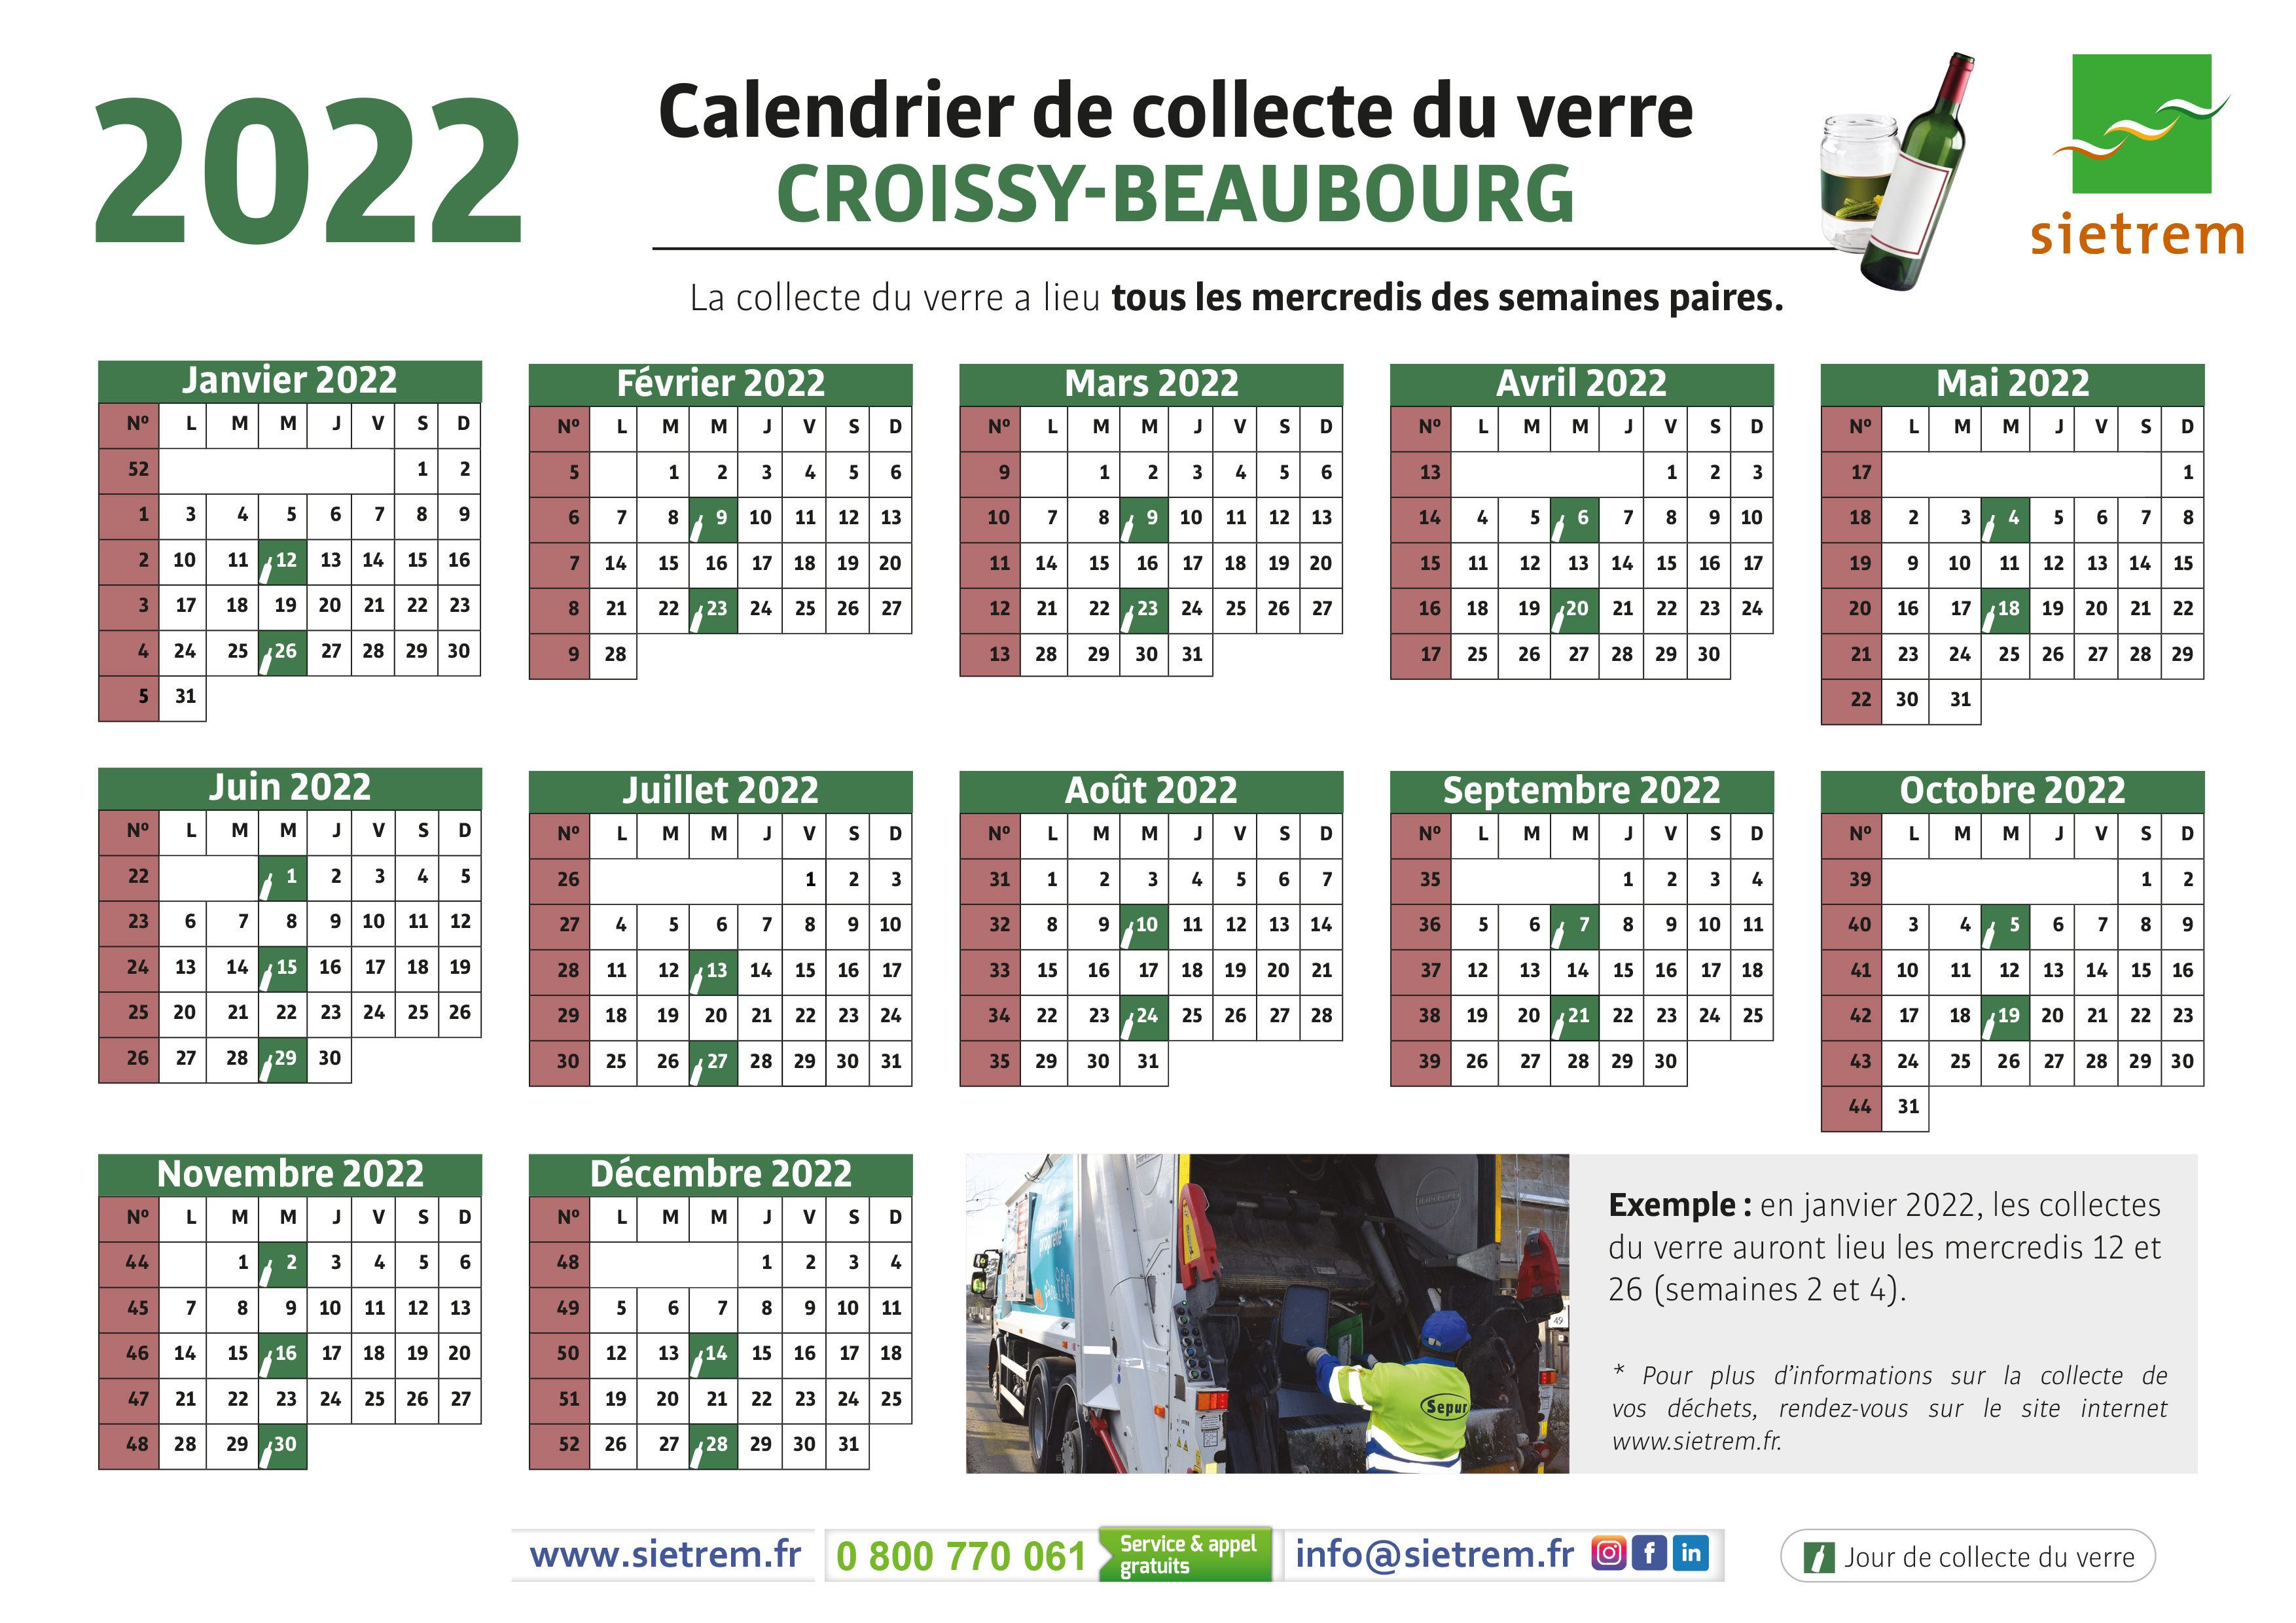 Collecte-verre-Calendrier-Croissy-Beaubourg-2022.jpg